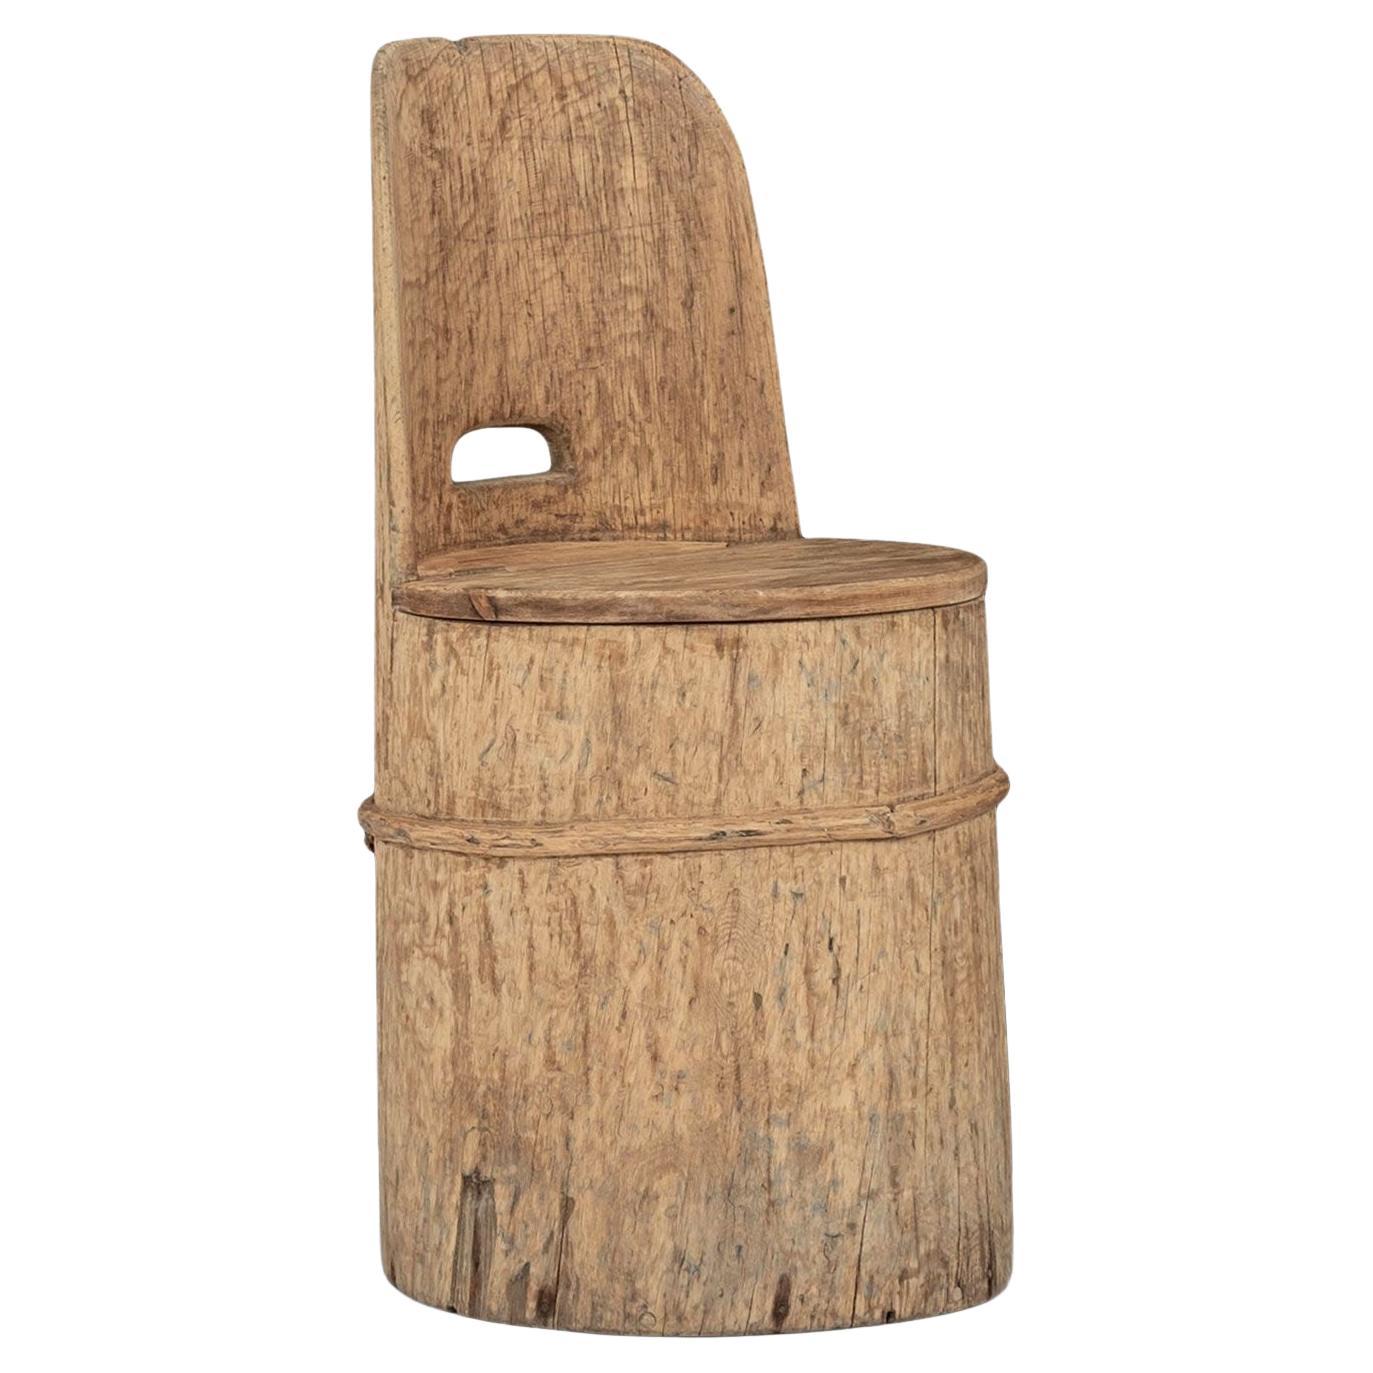 Primitive Swedish Pine Log Chair or Kubbestol For Sale